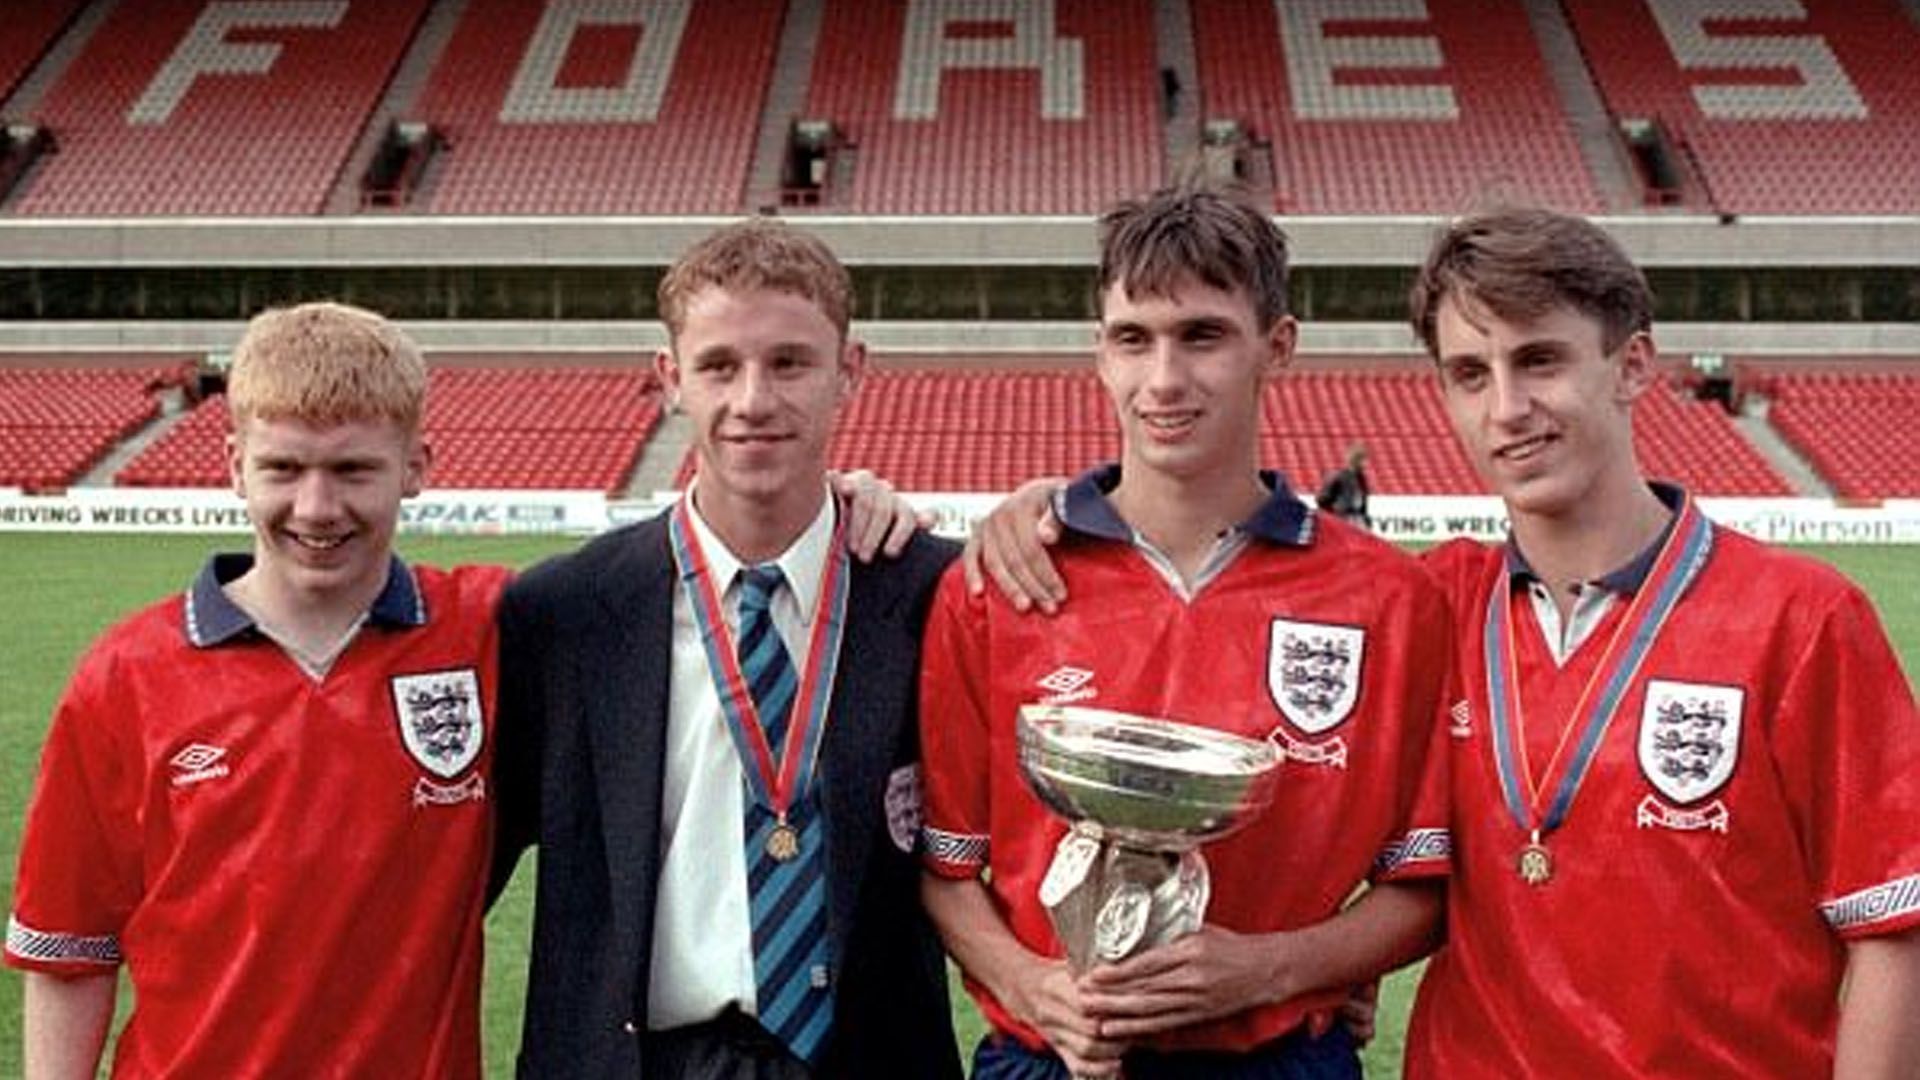 Chris Casper holding the U18 European Championship trophy alongside Paul Scholes, Nicky Butt and Gary Neville.